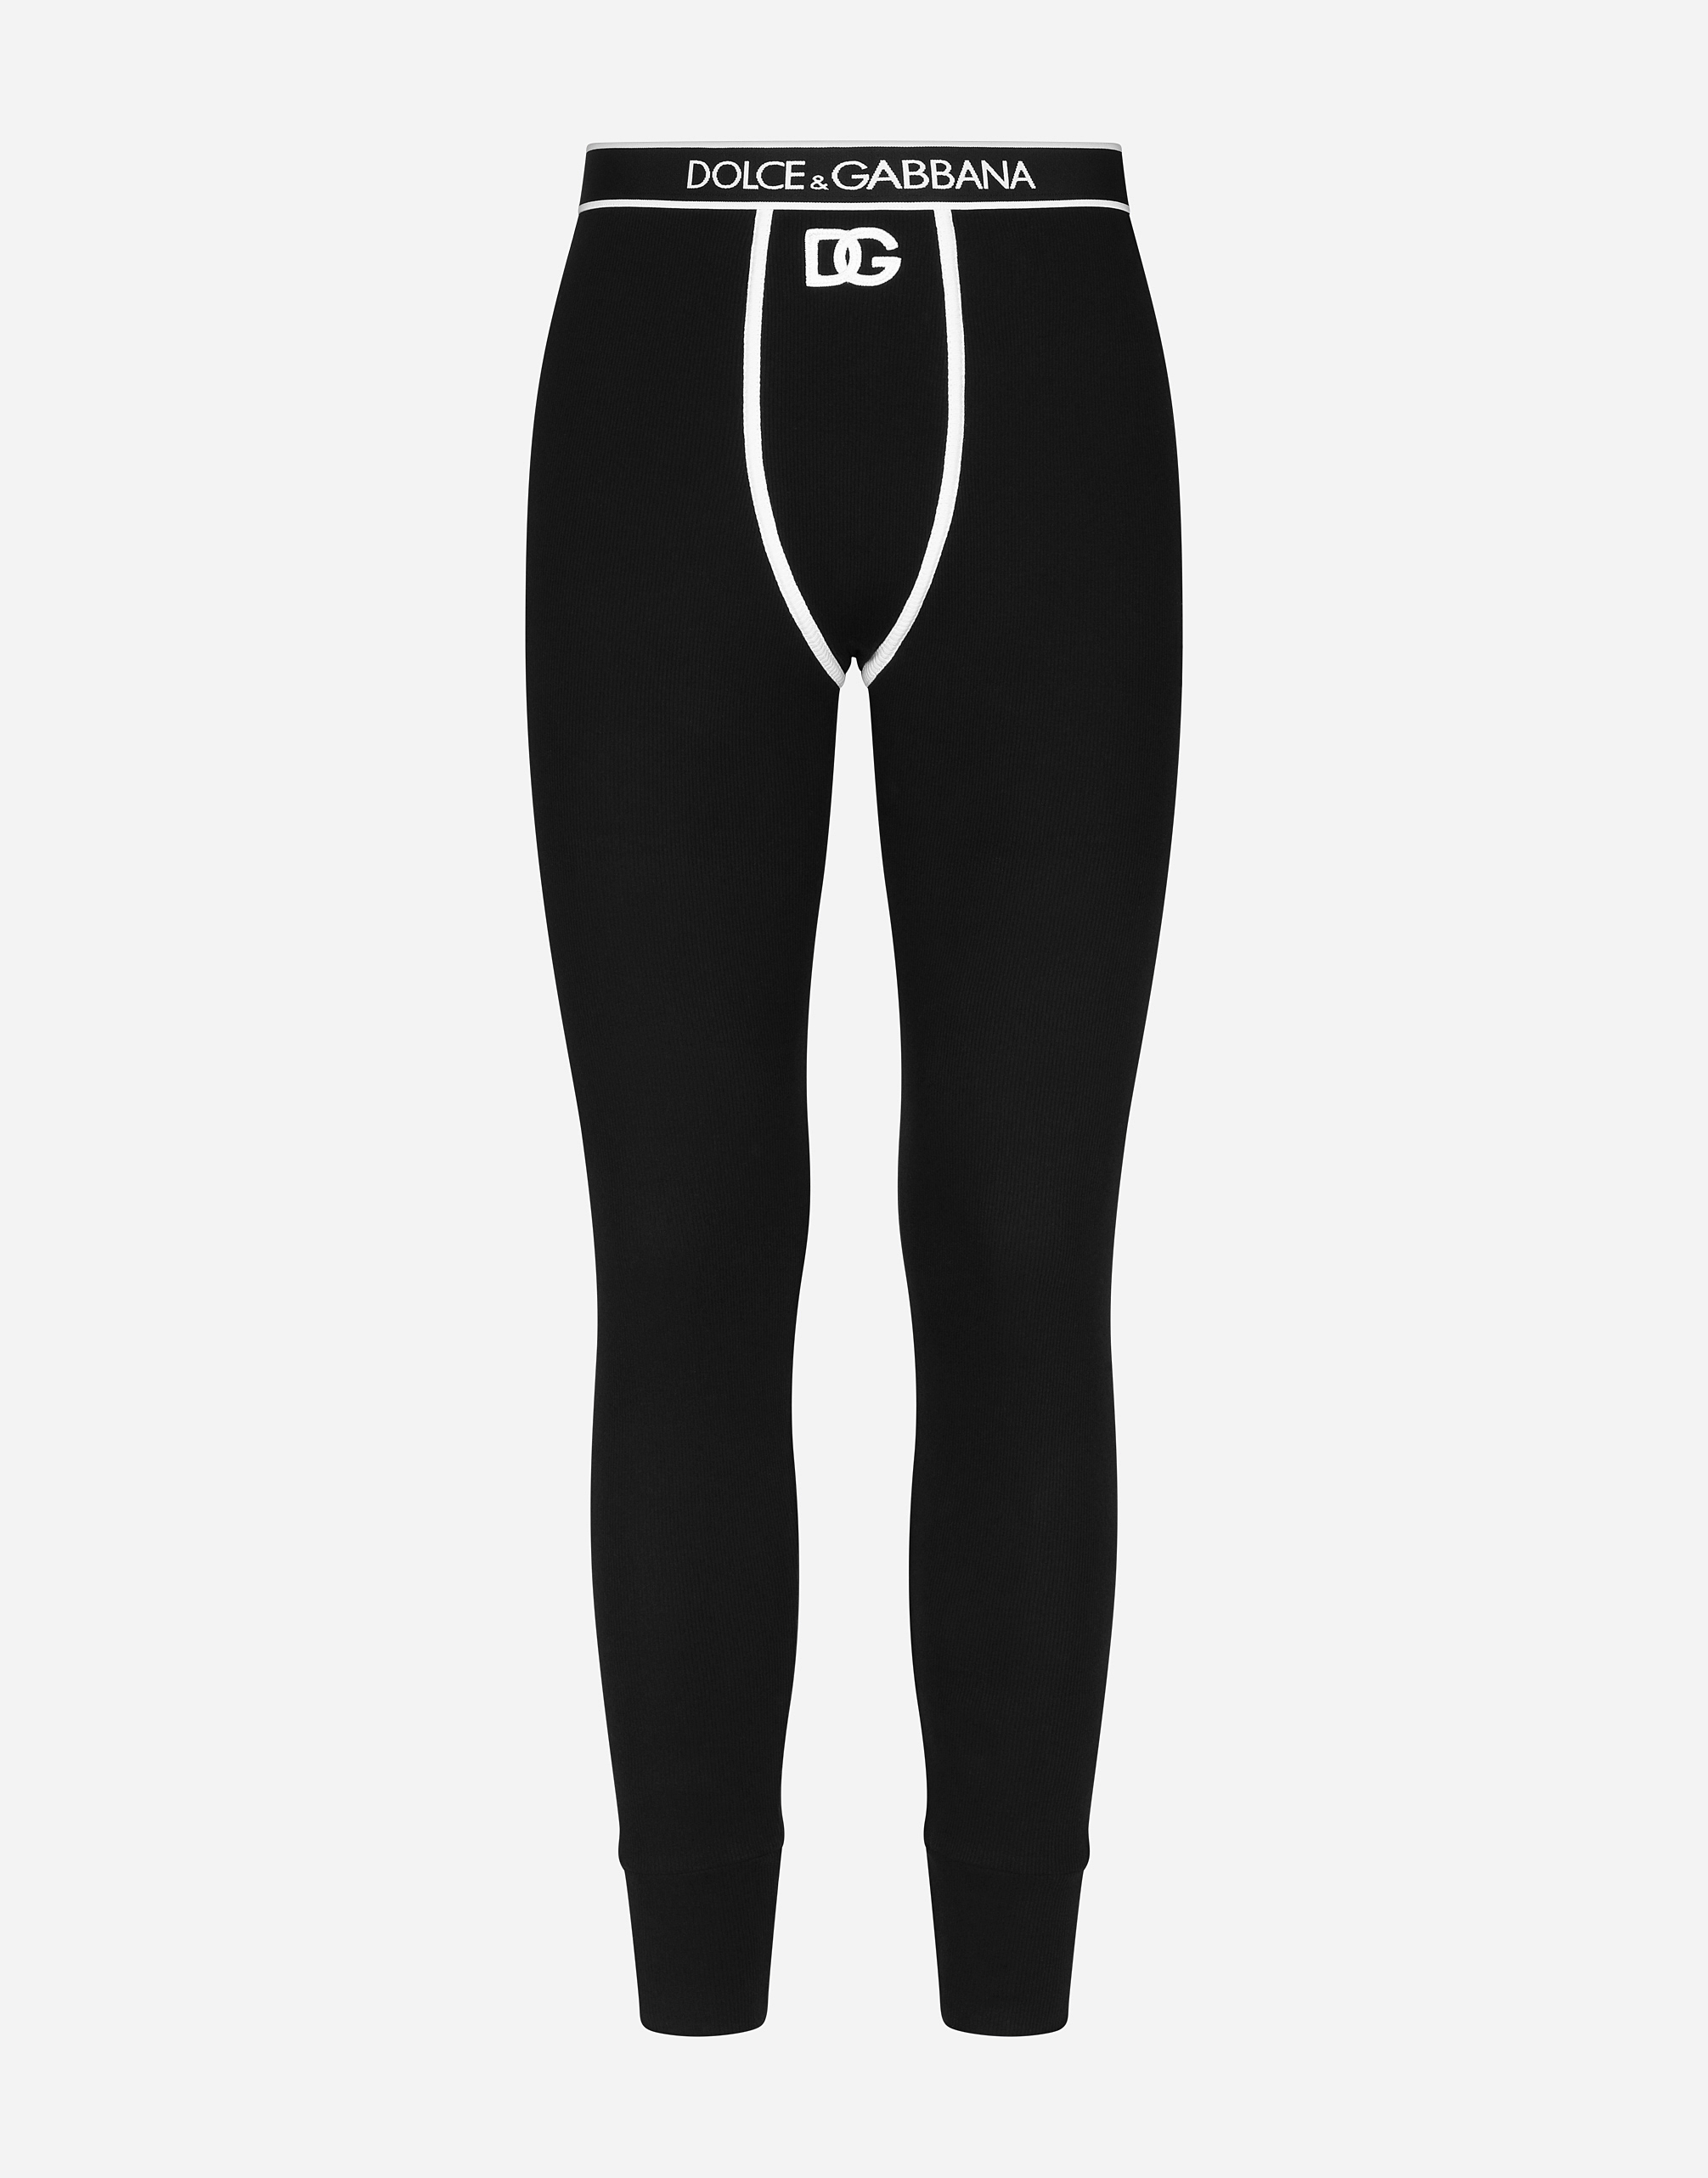 Fine-rib cotton leggings with DG patch in Black/White